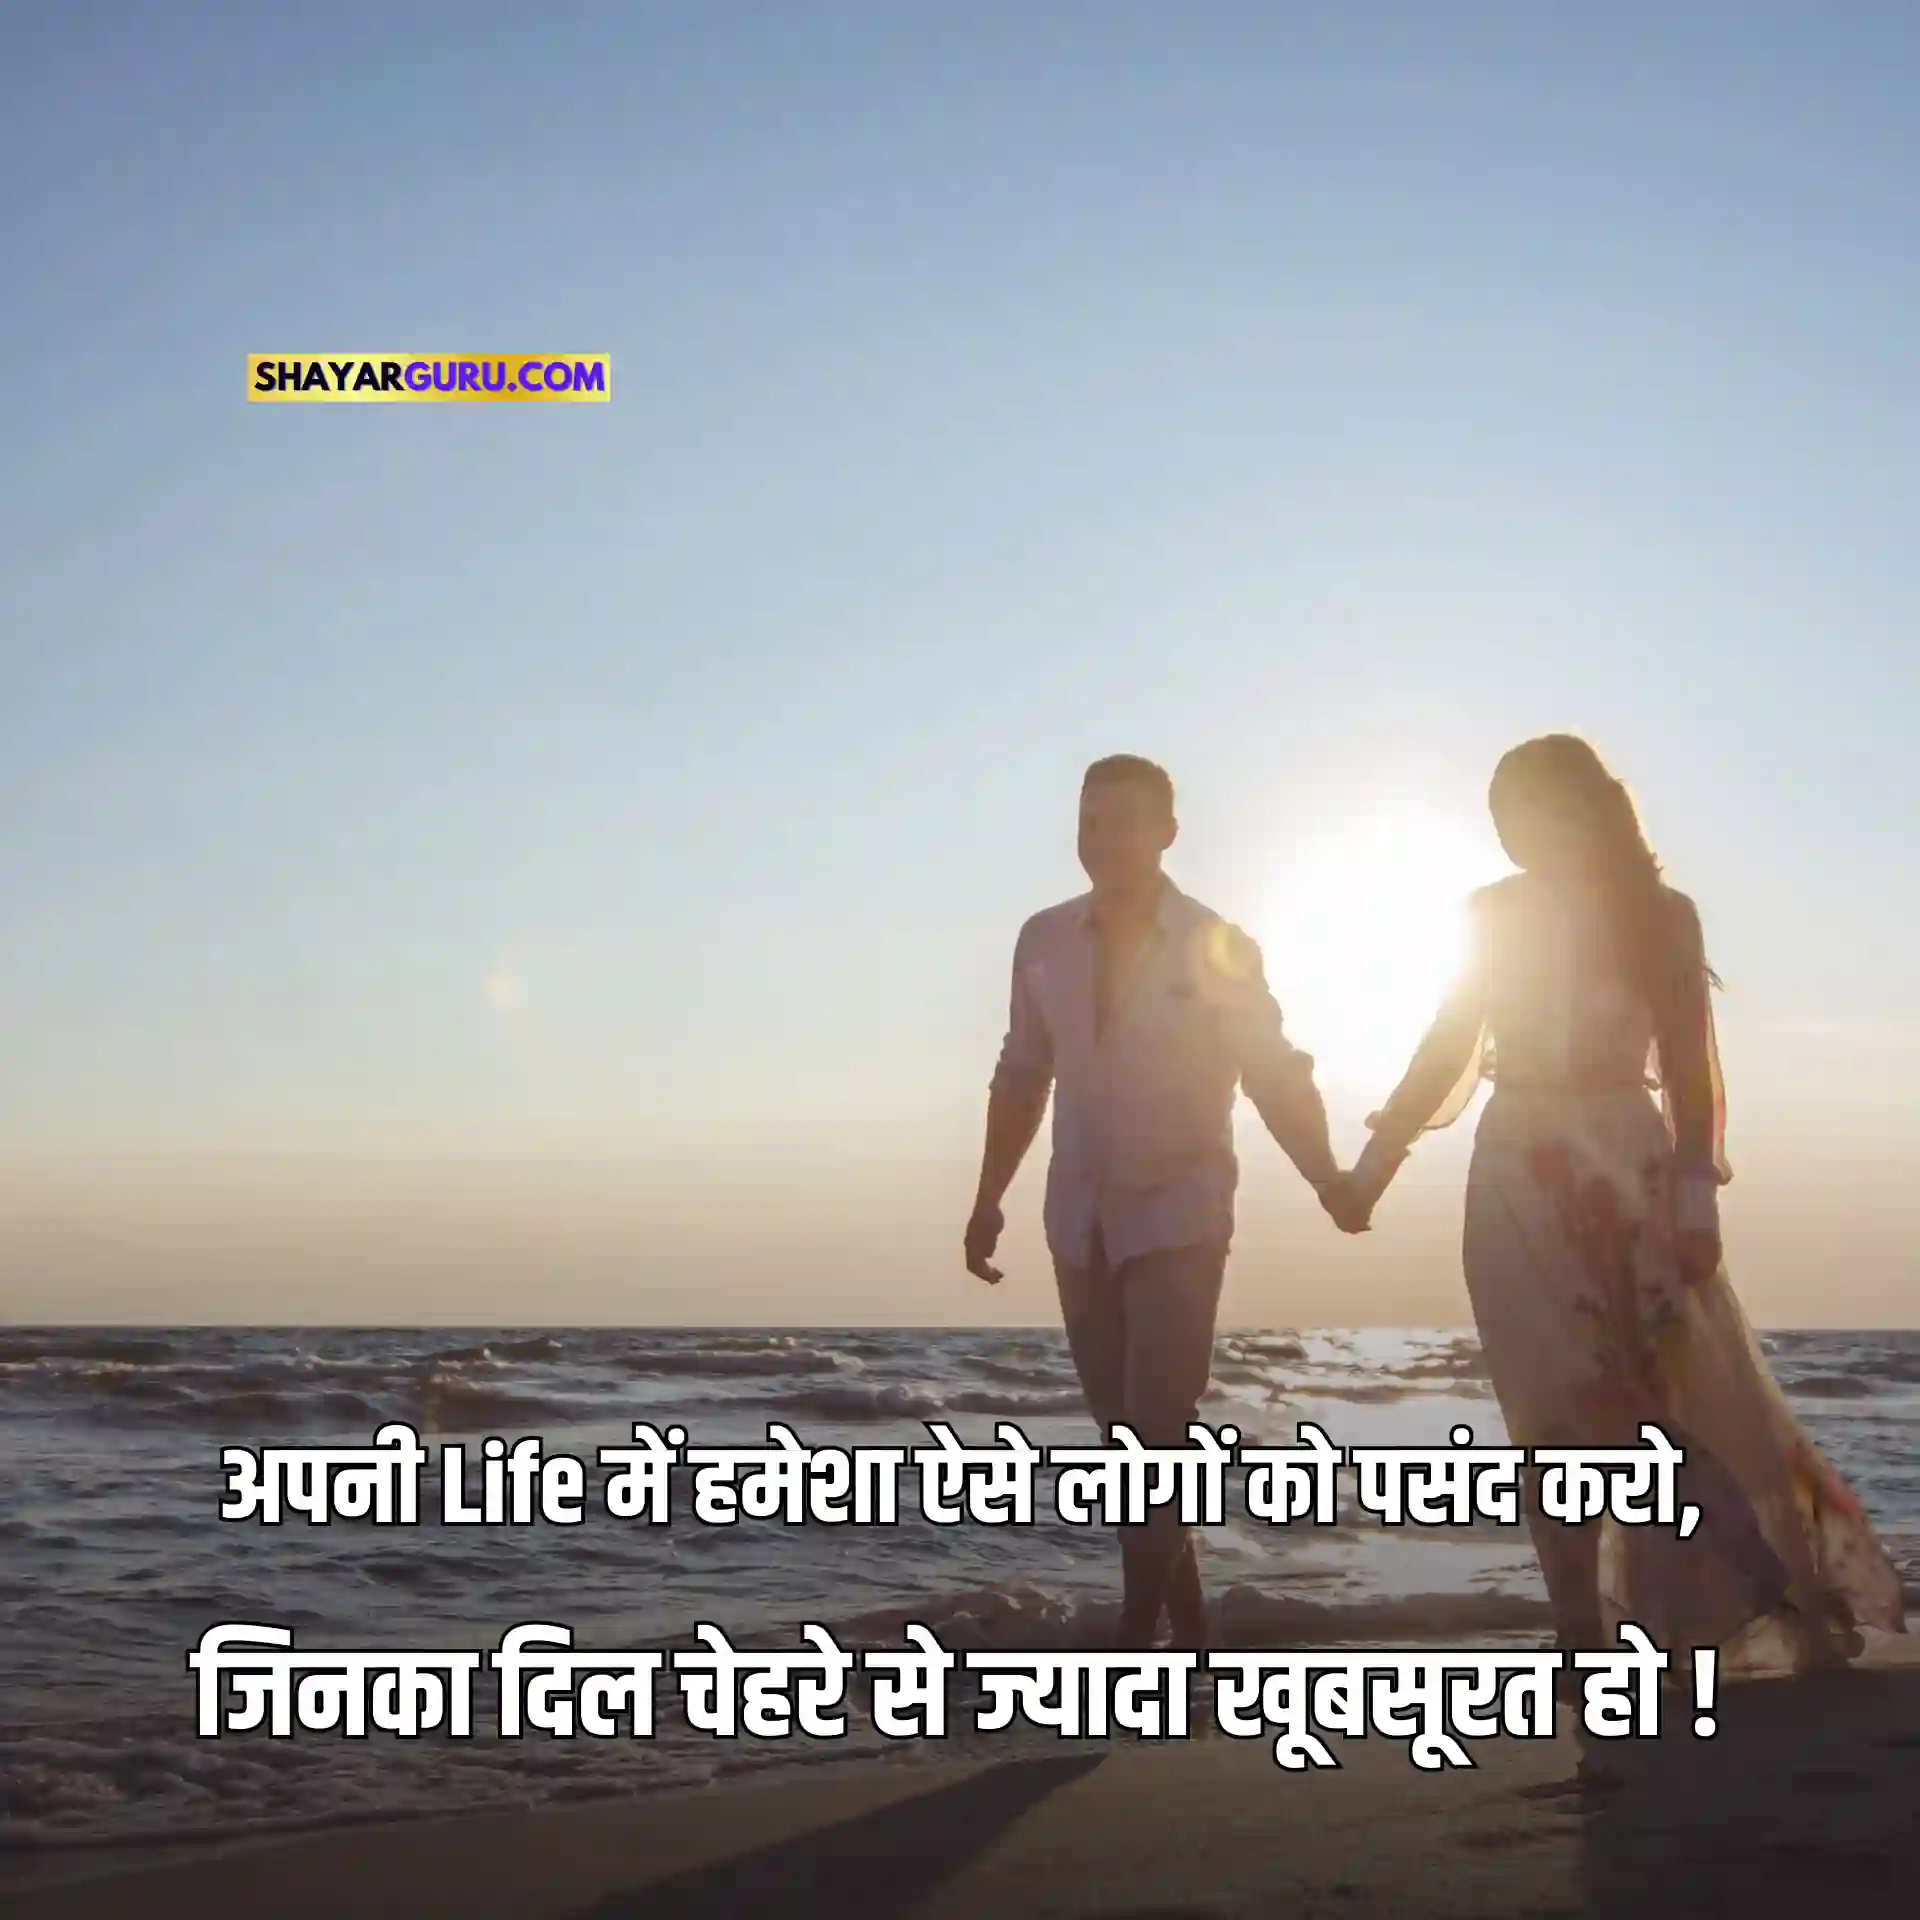 True Lines in Hindi